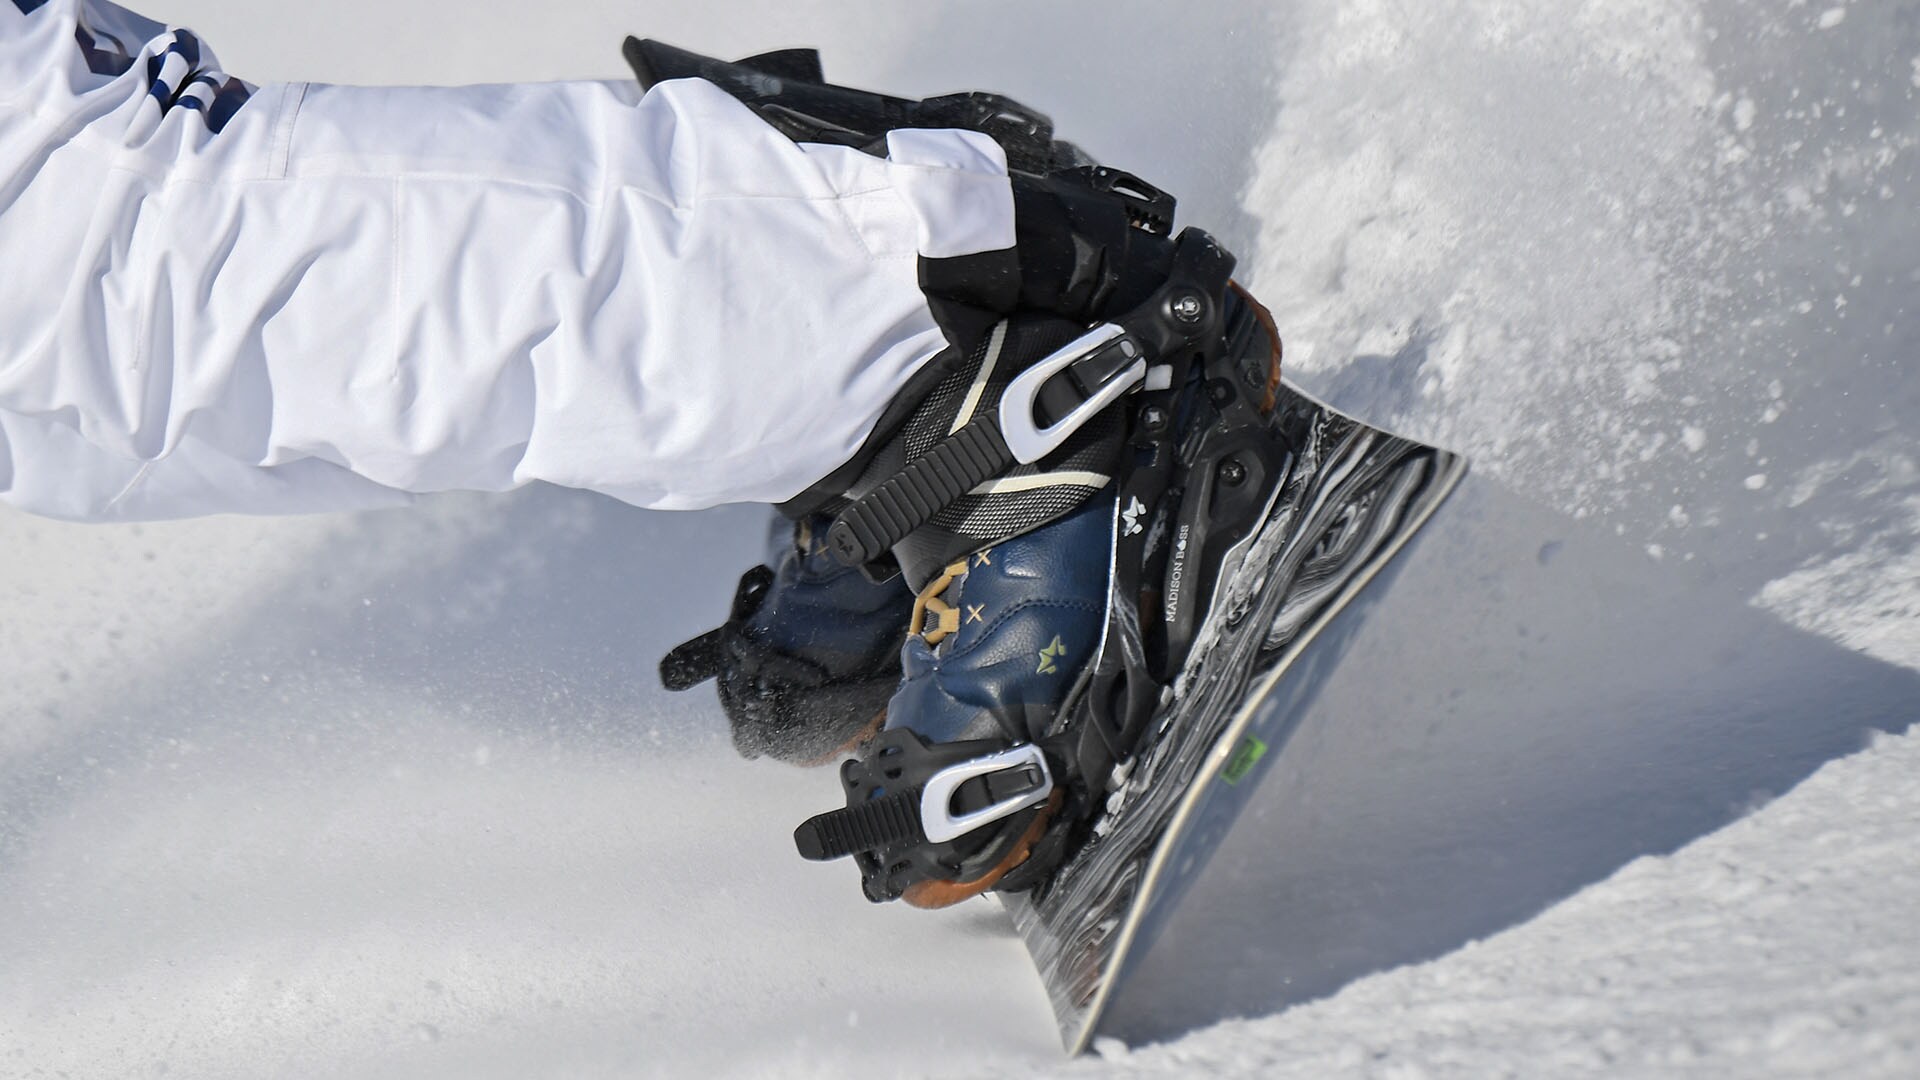 Snowboarding 101 Equipment